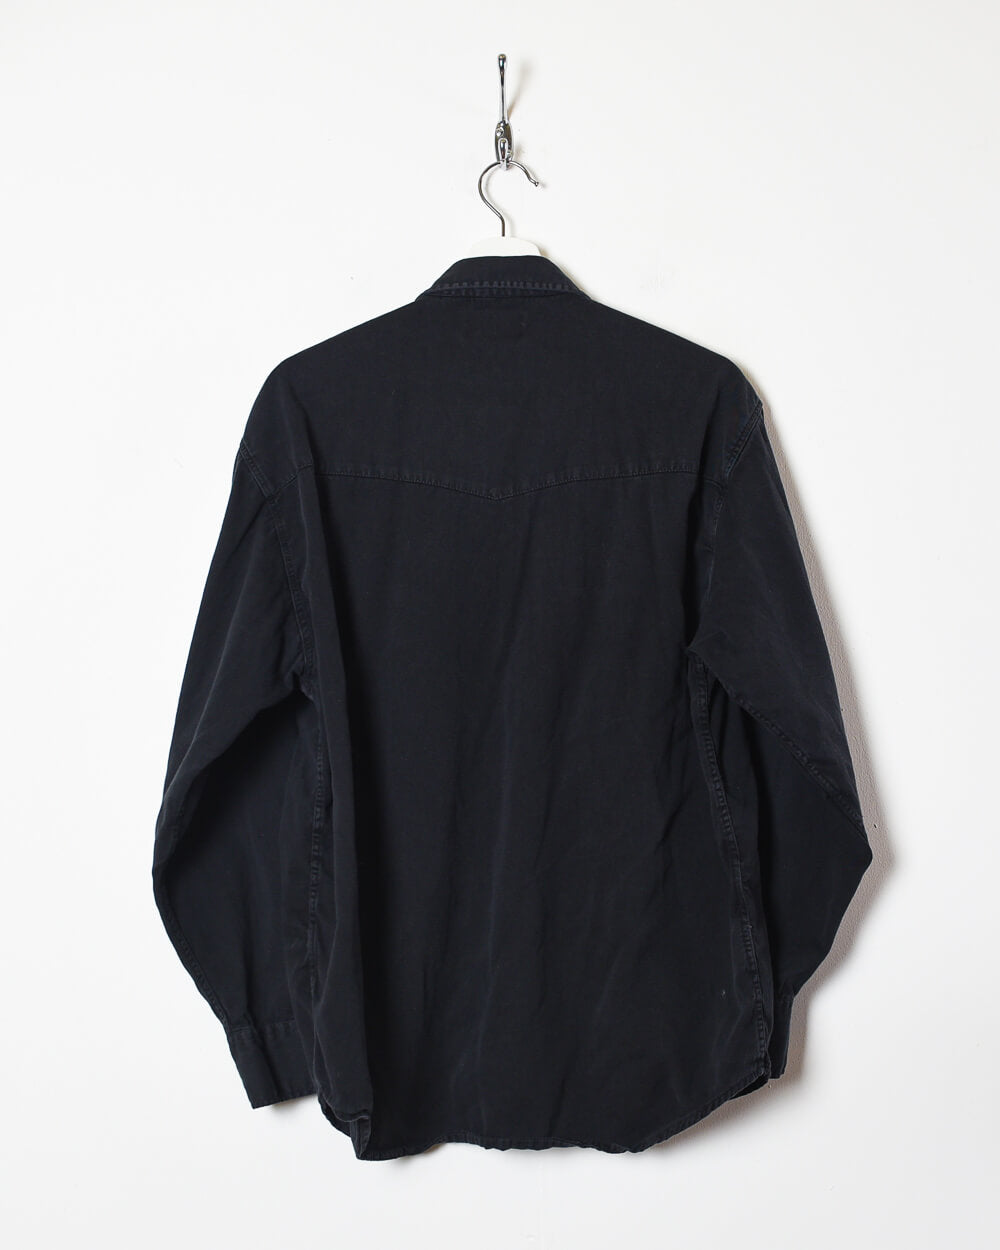 Black Lee Shirt - Medium